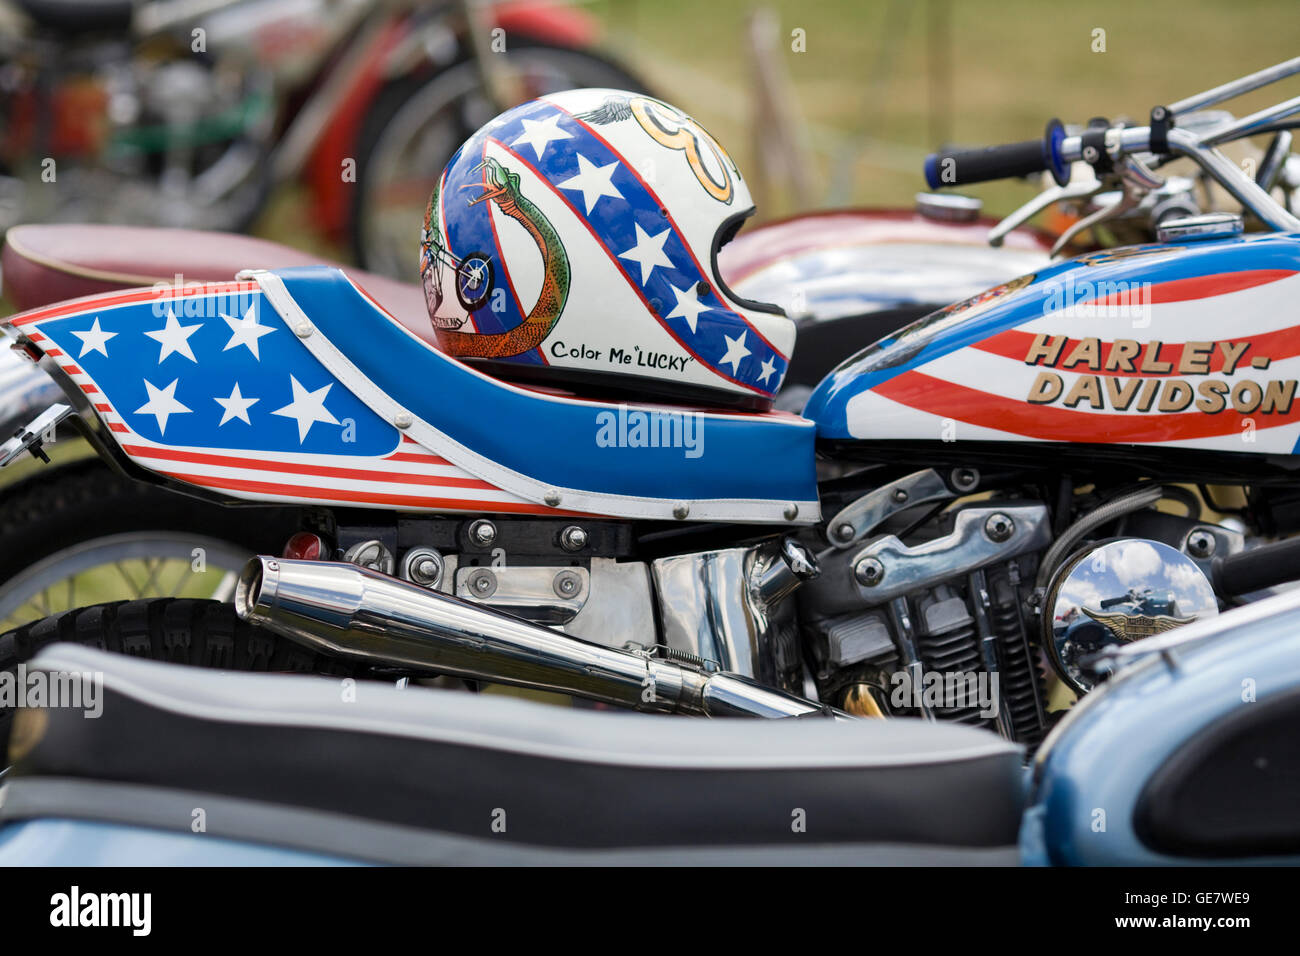 Stars And Stripes Motorradhelm auf einer Harley Davidson Motorrad Stockfoto